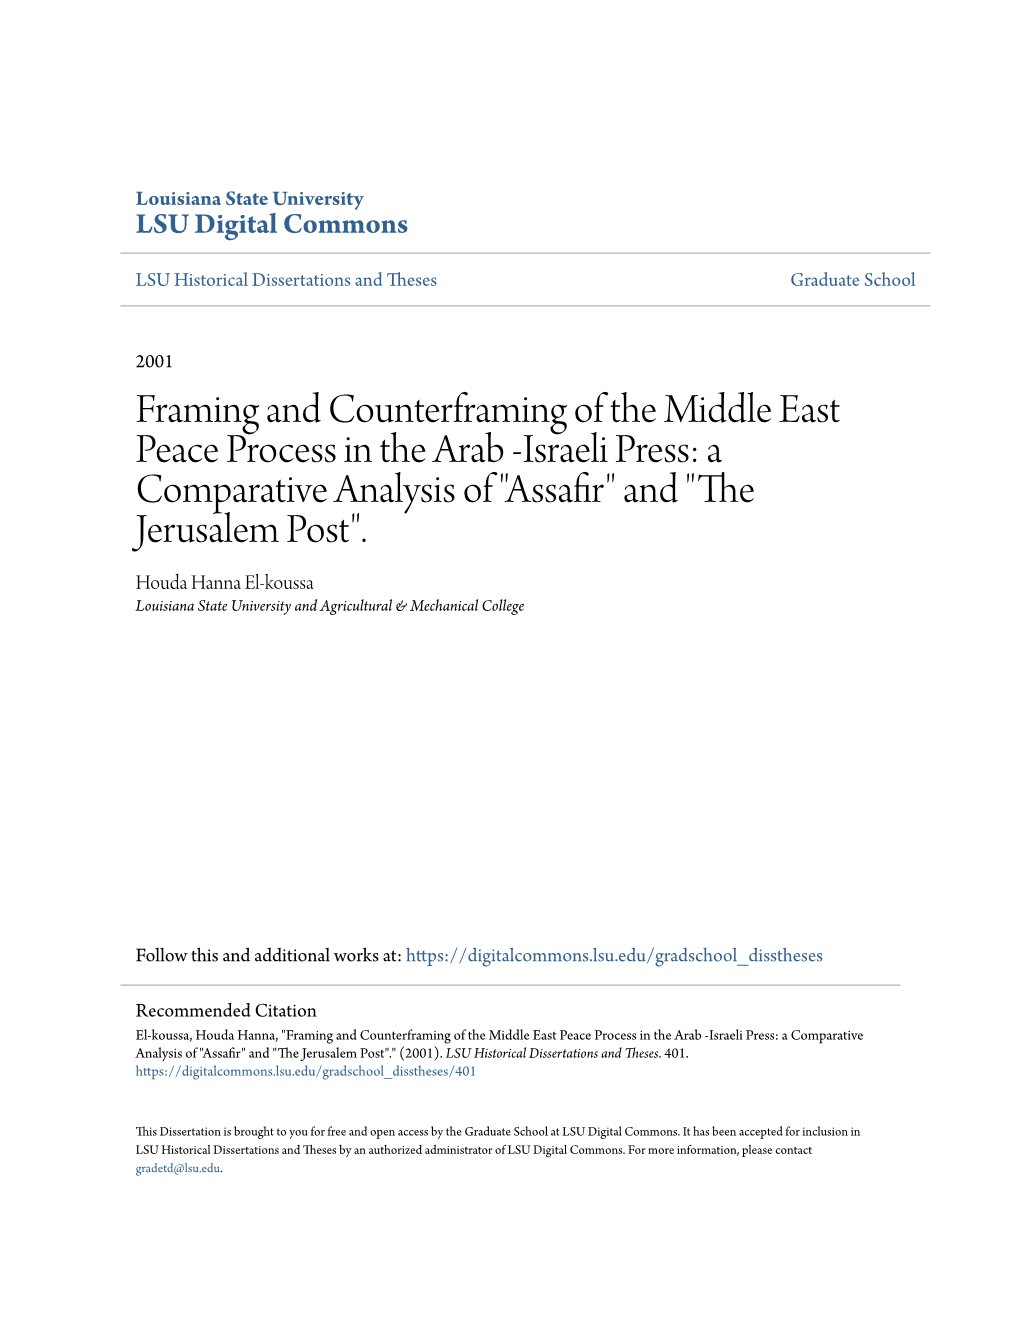 Israeli Press: a Comparative Analysis of "Assafir" and "The Jerusalem Post"